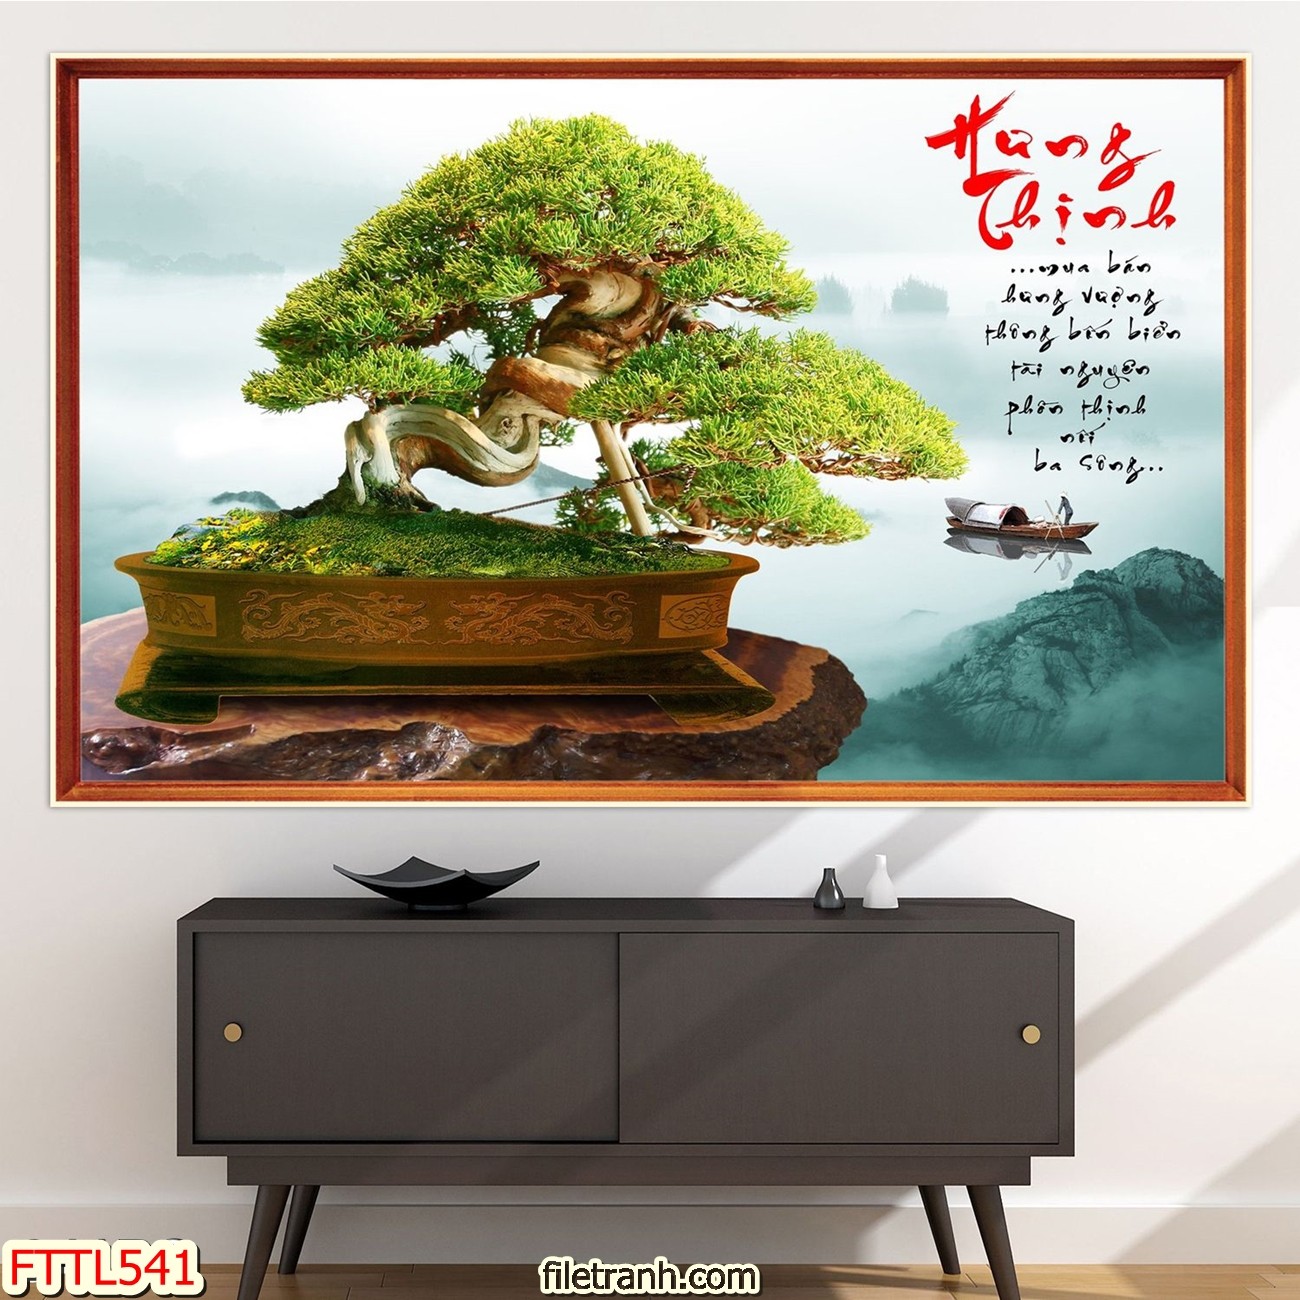 https://filetranh.com/file-tranh-chau-mai-bonsai/file-tranh-chau-mai-bonsai-fttl541.html